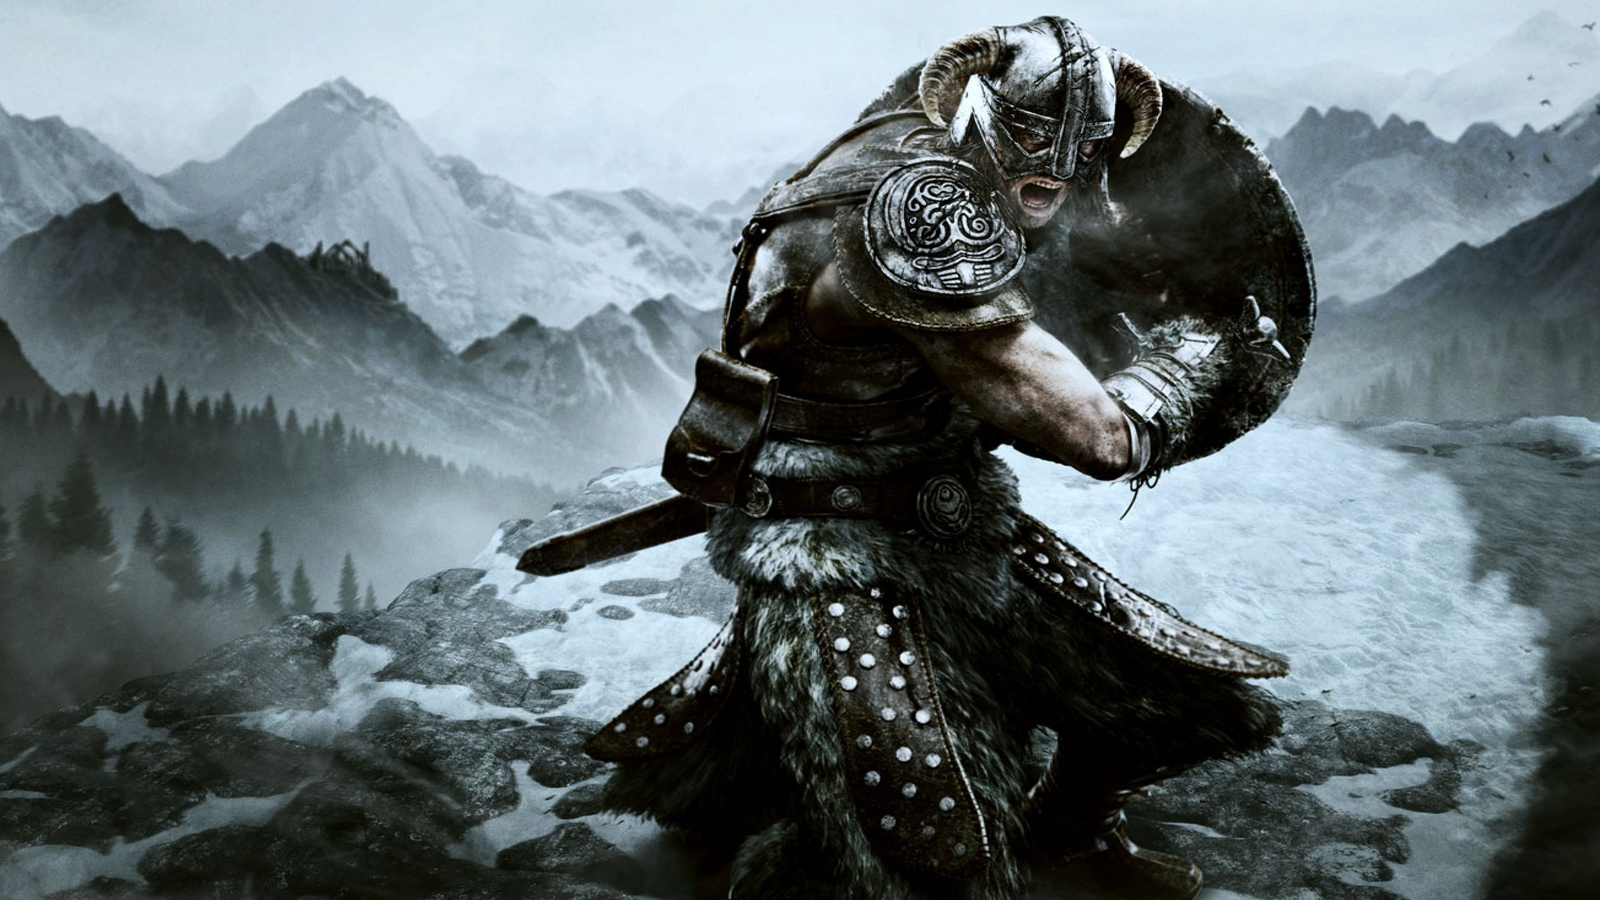 Elder Scrolls 6 Set for E3 2015 Release? 5 Most Crazy Rumours So